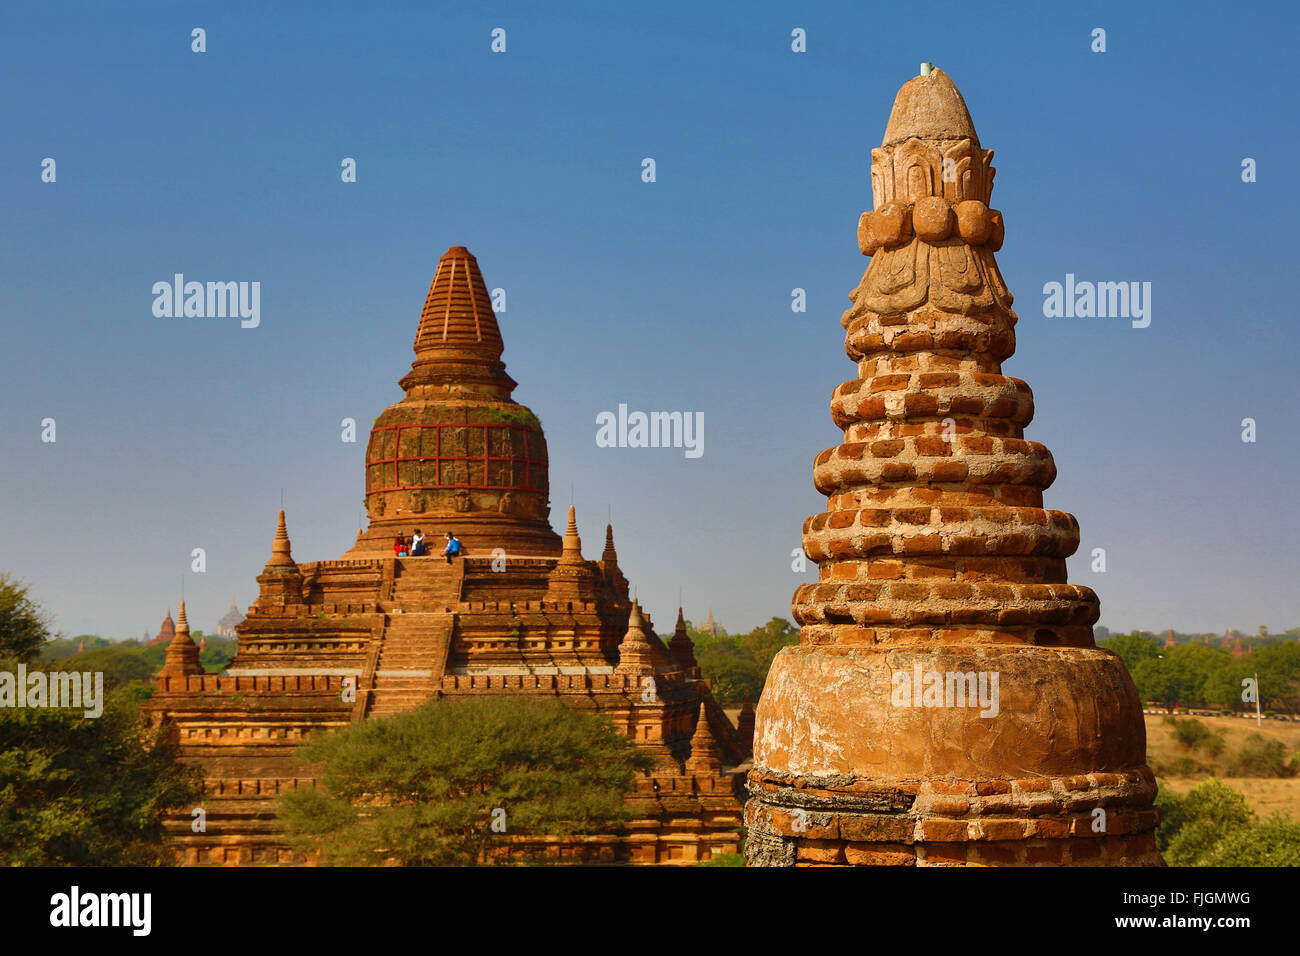 Bulethi Temple Pagoda on the Plain of Bagan, Bagan, Myanmar (Burma) Stock Photo